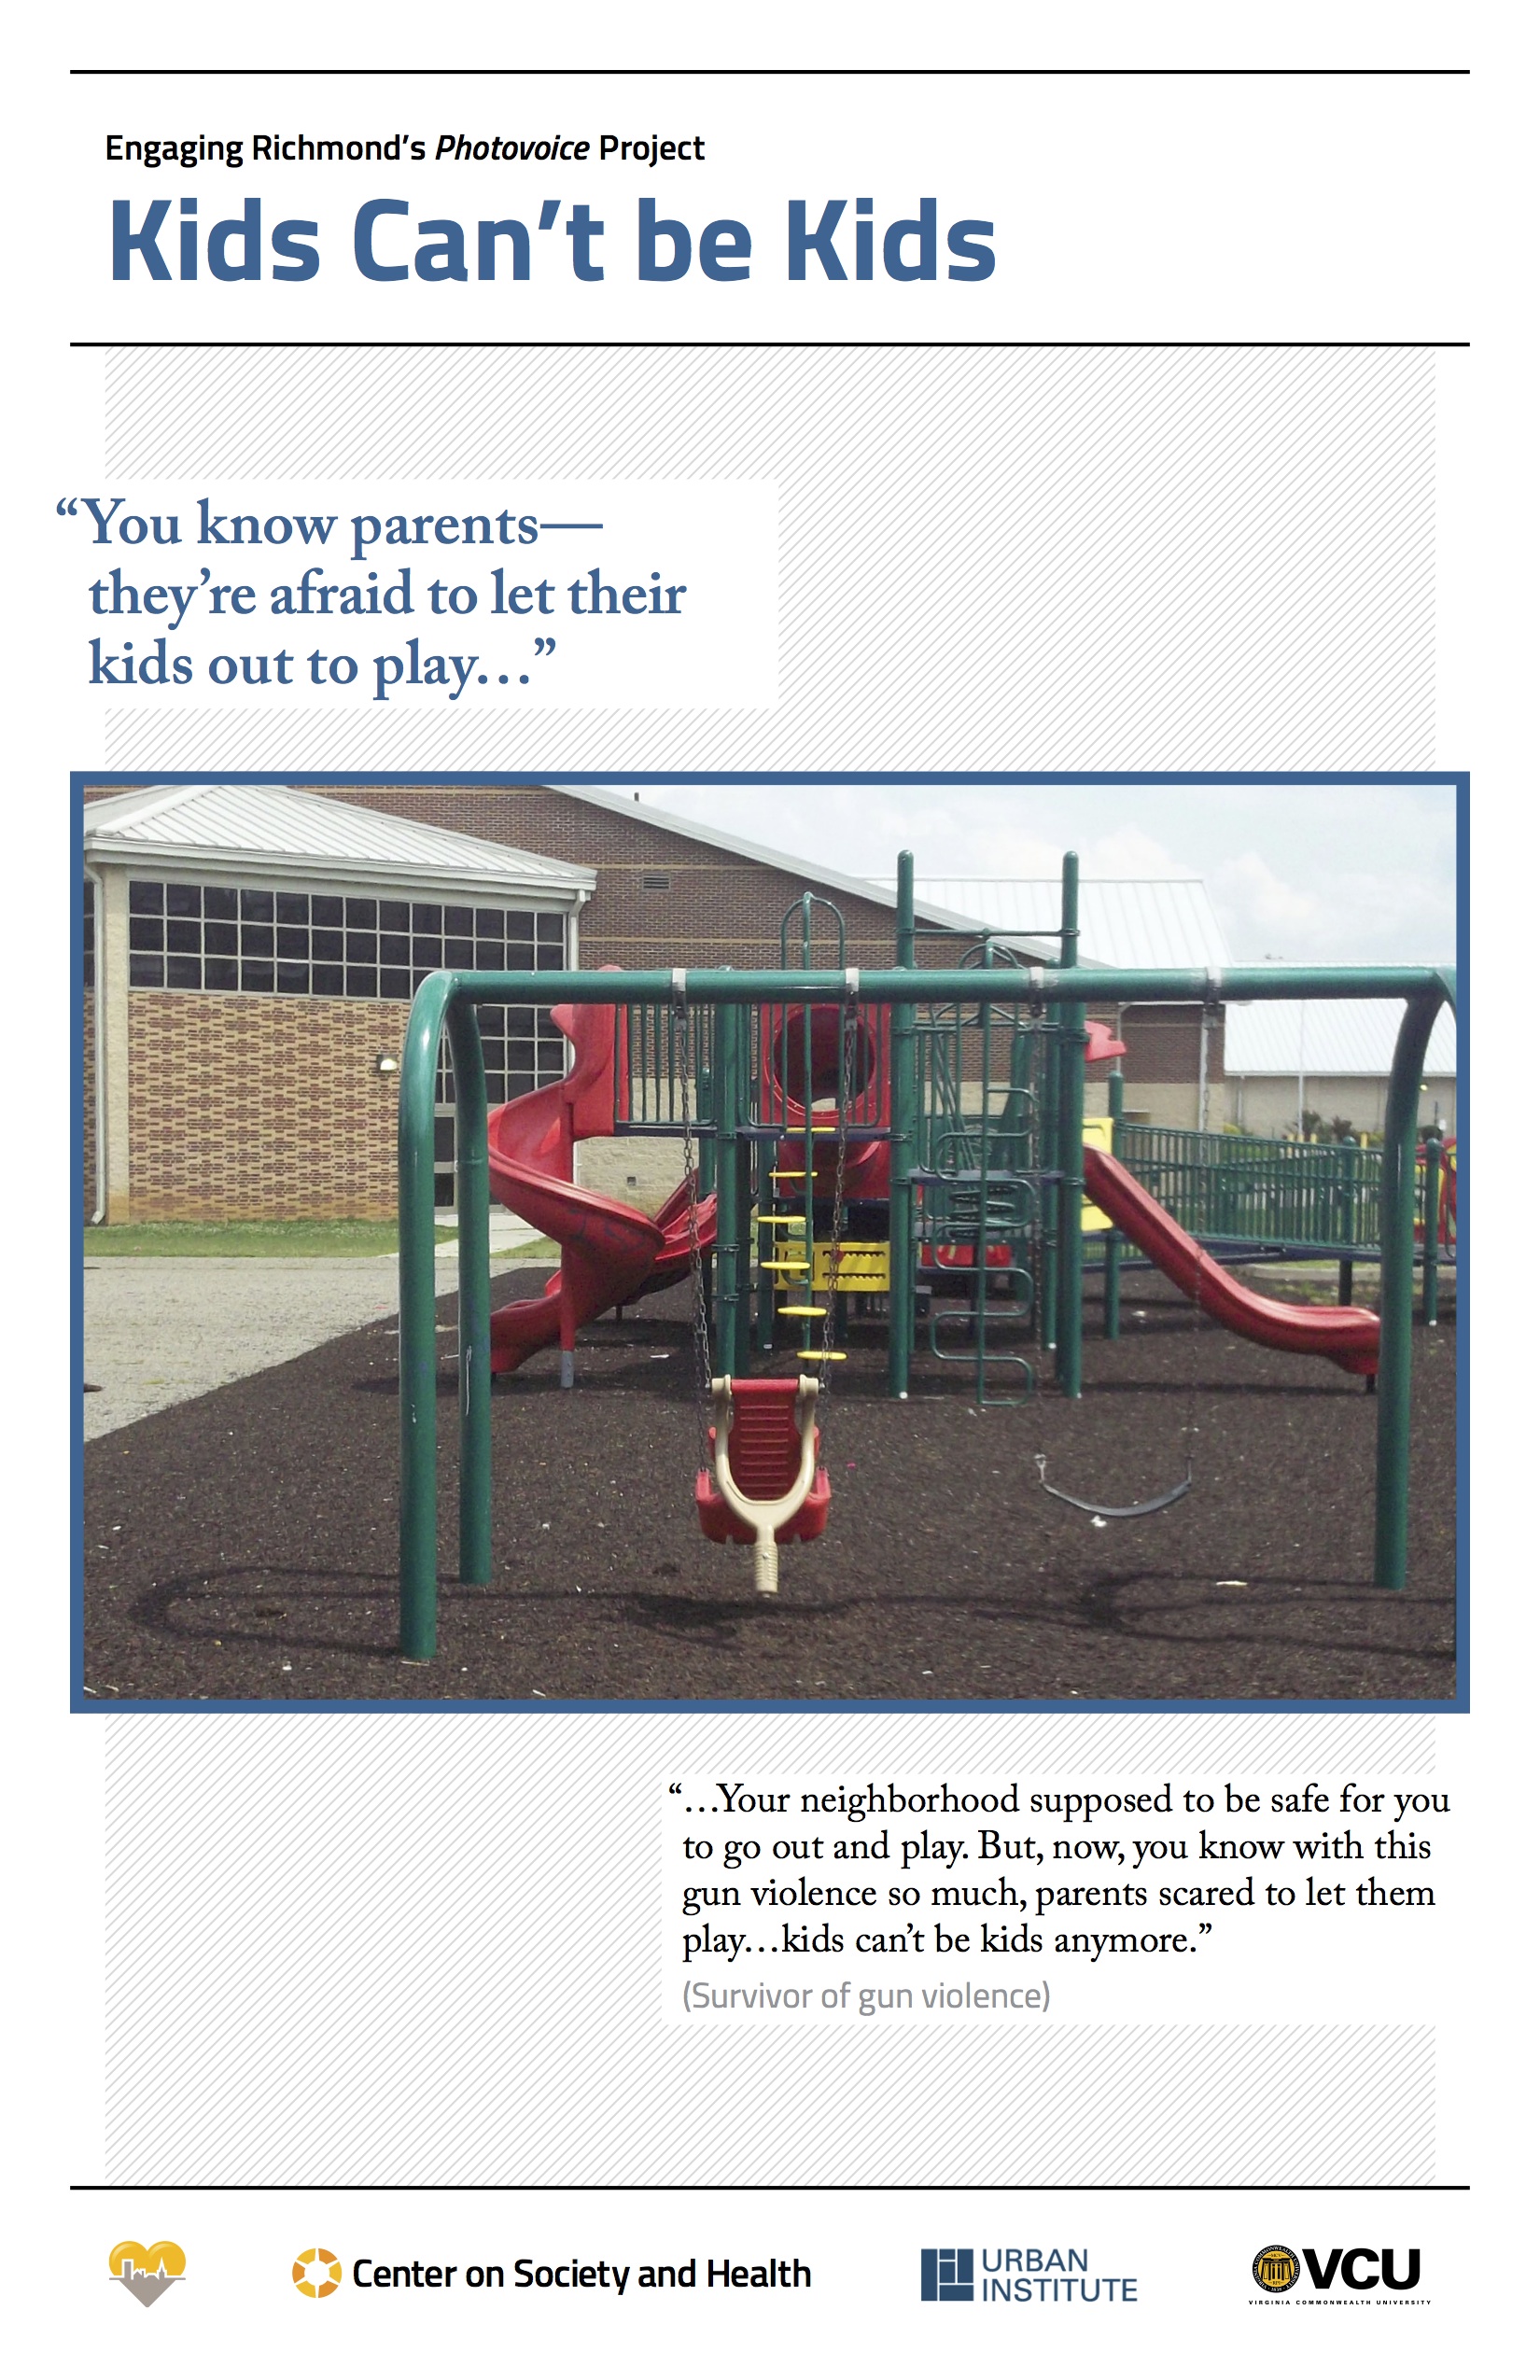 Slide 1: Kids Can't be Kids